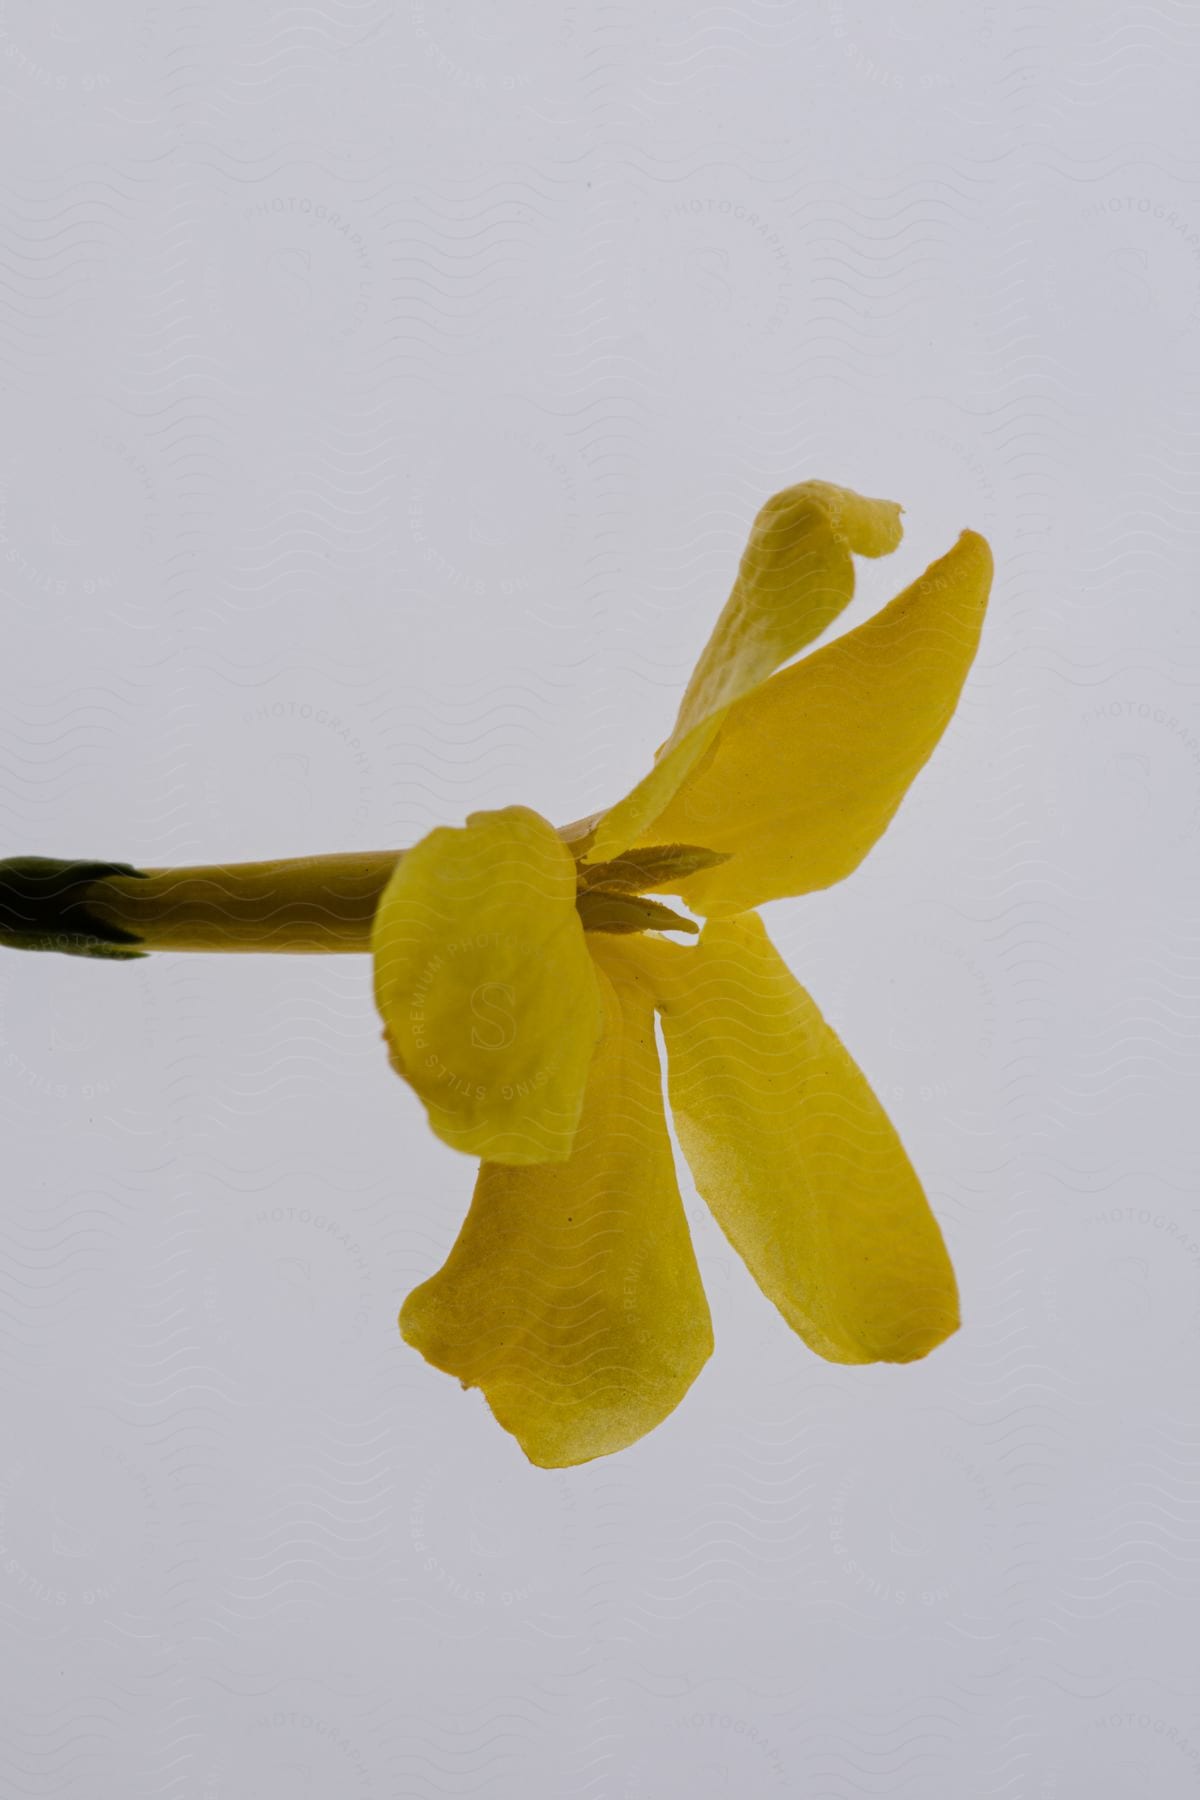 Single yellow jasmine against a white background.